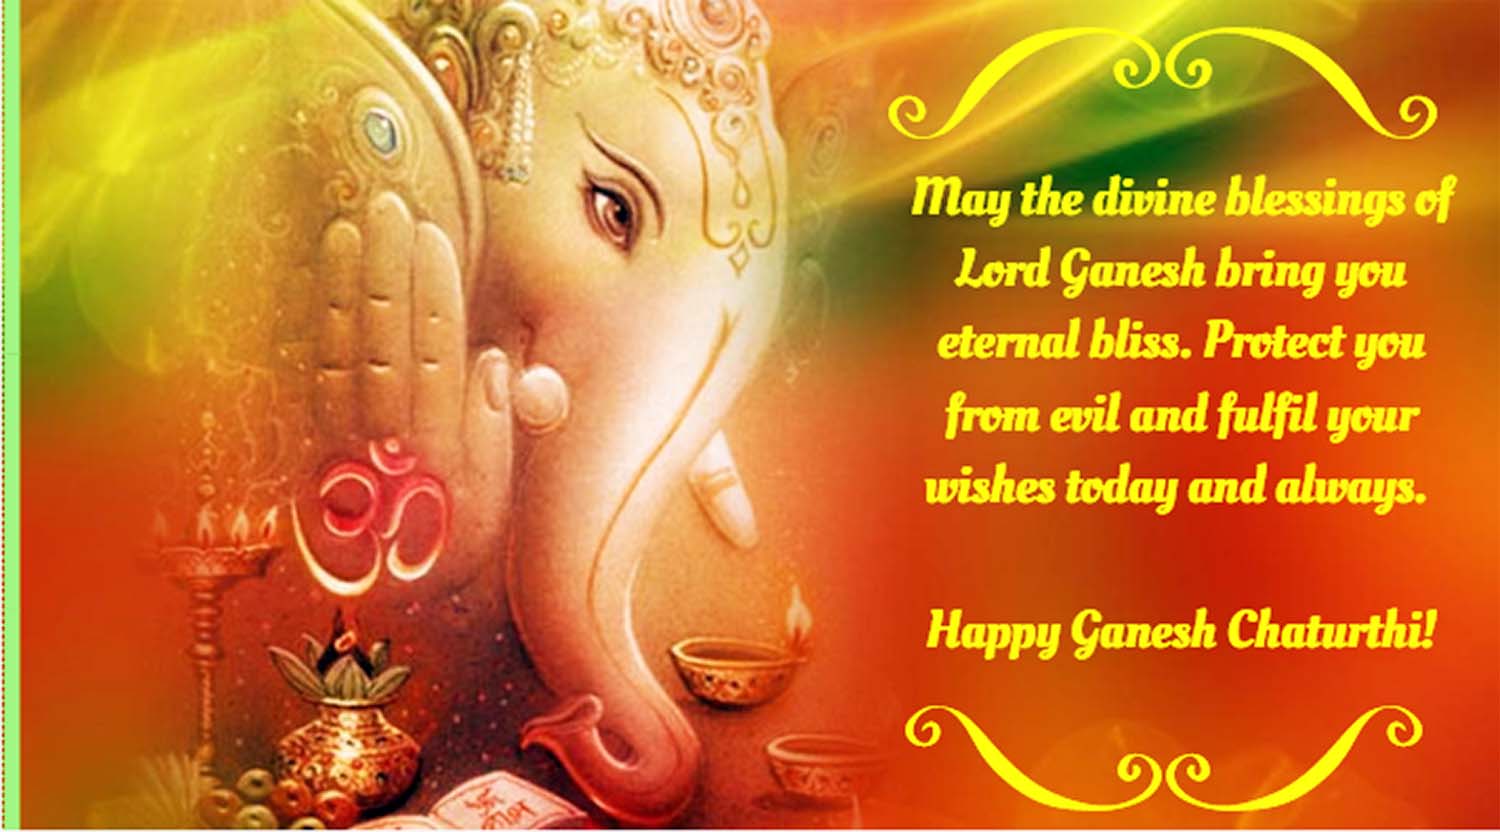 Beautiful greetings for Ganesh Chaturthi